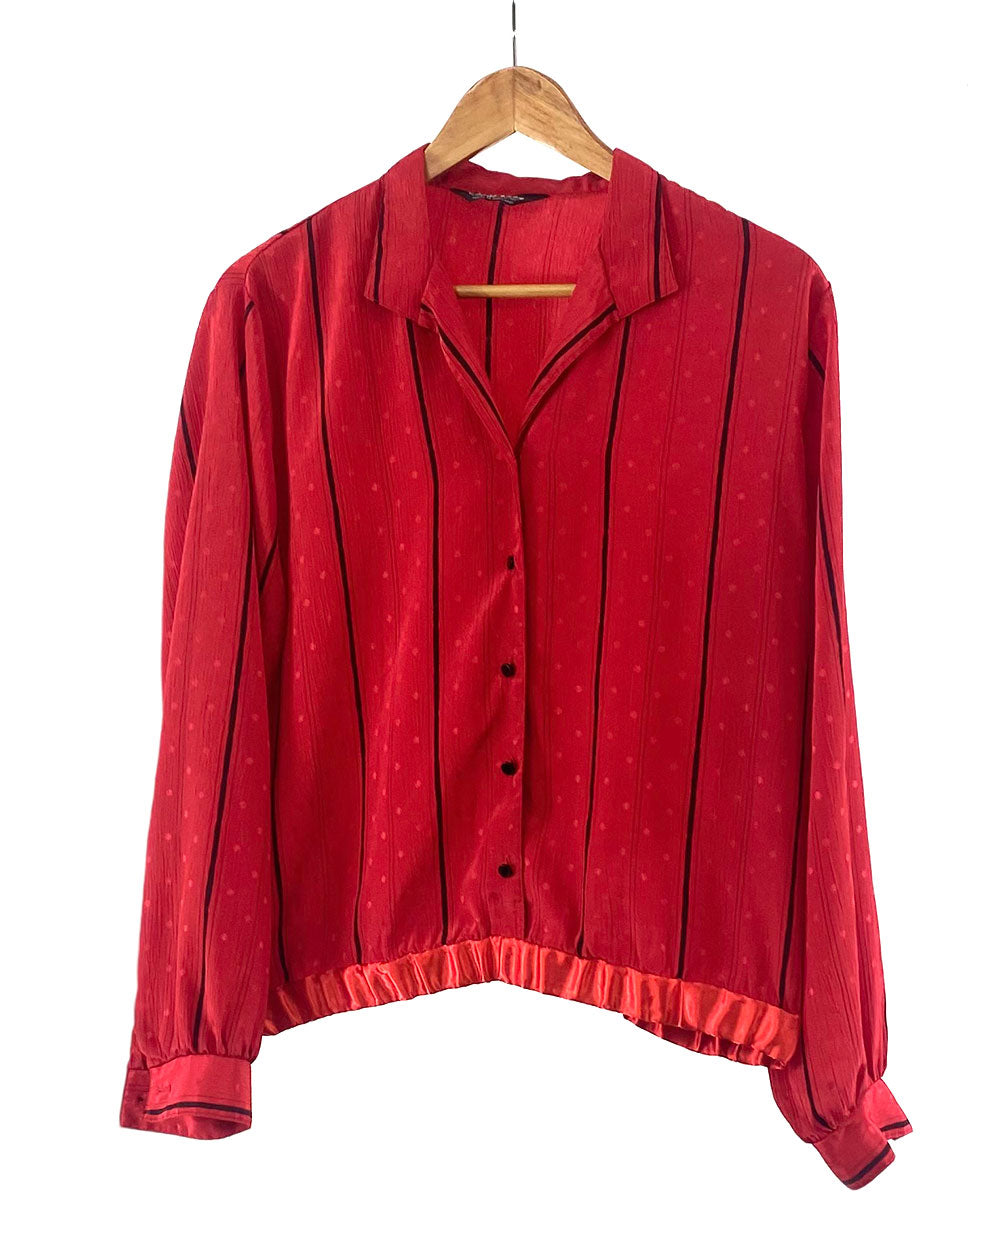 Vintage Elsie Whiteley Red Blouse Size 16